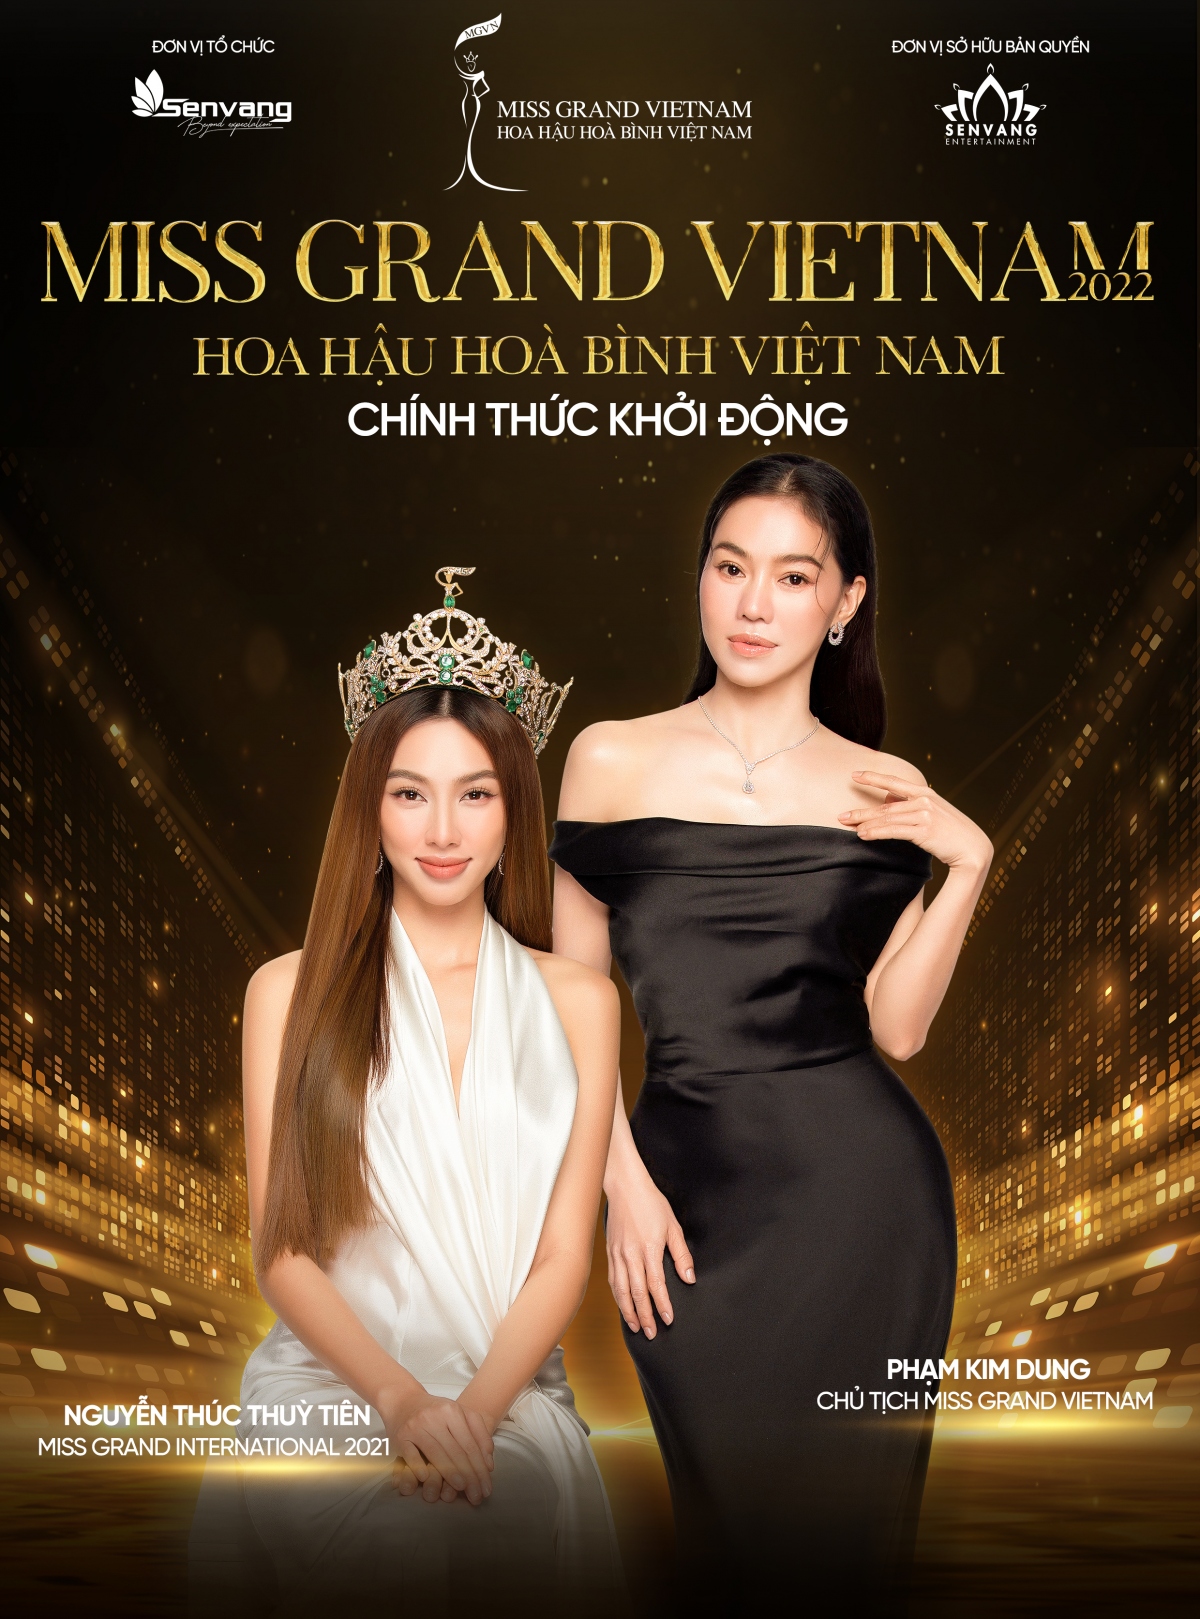 chinh thuc khoi dong cuoc thi miss grand vietnam 2022 hinh anh 1